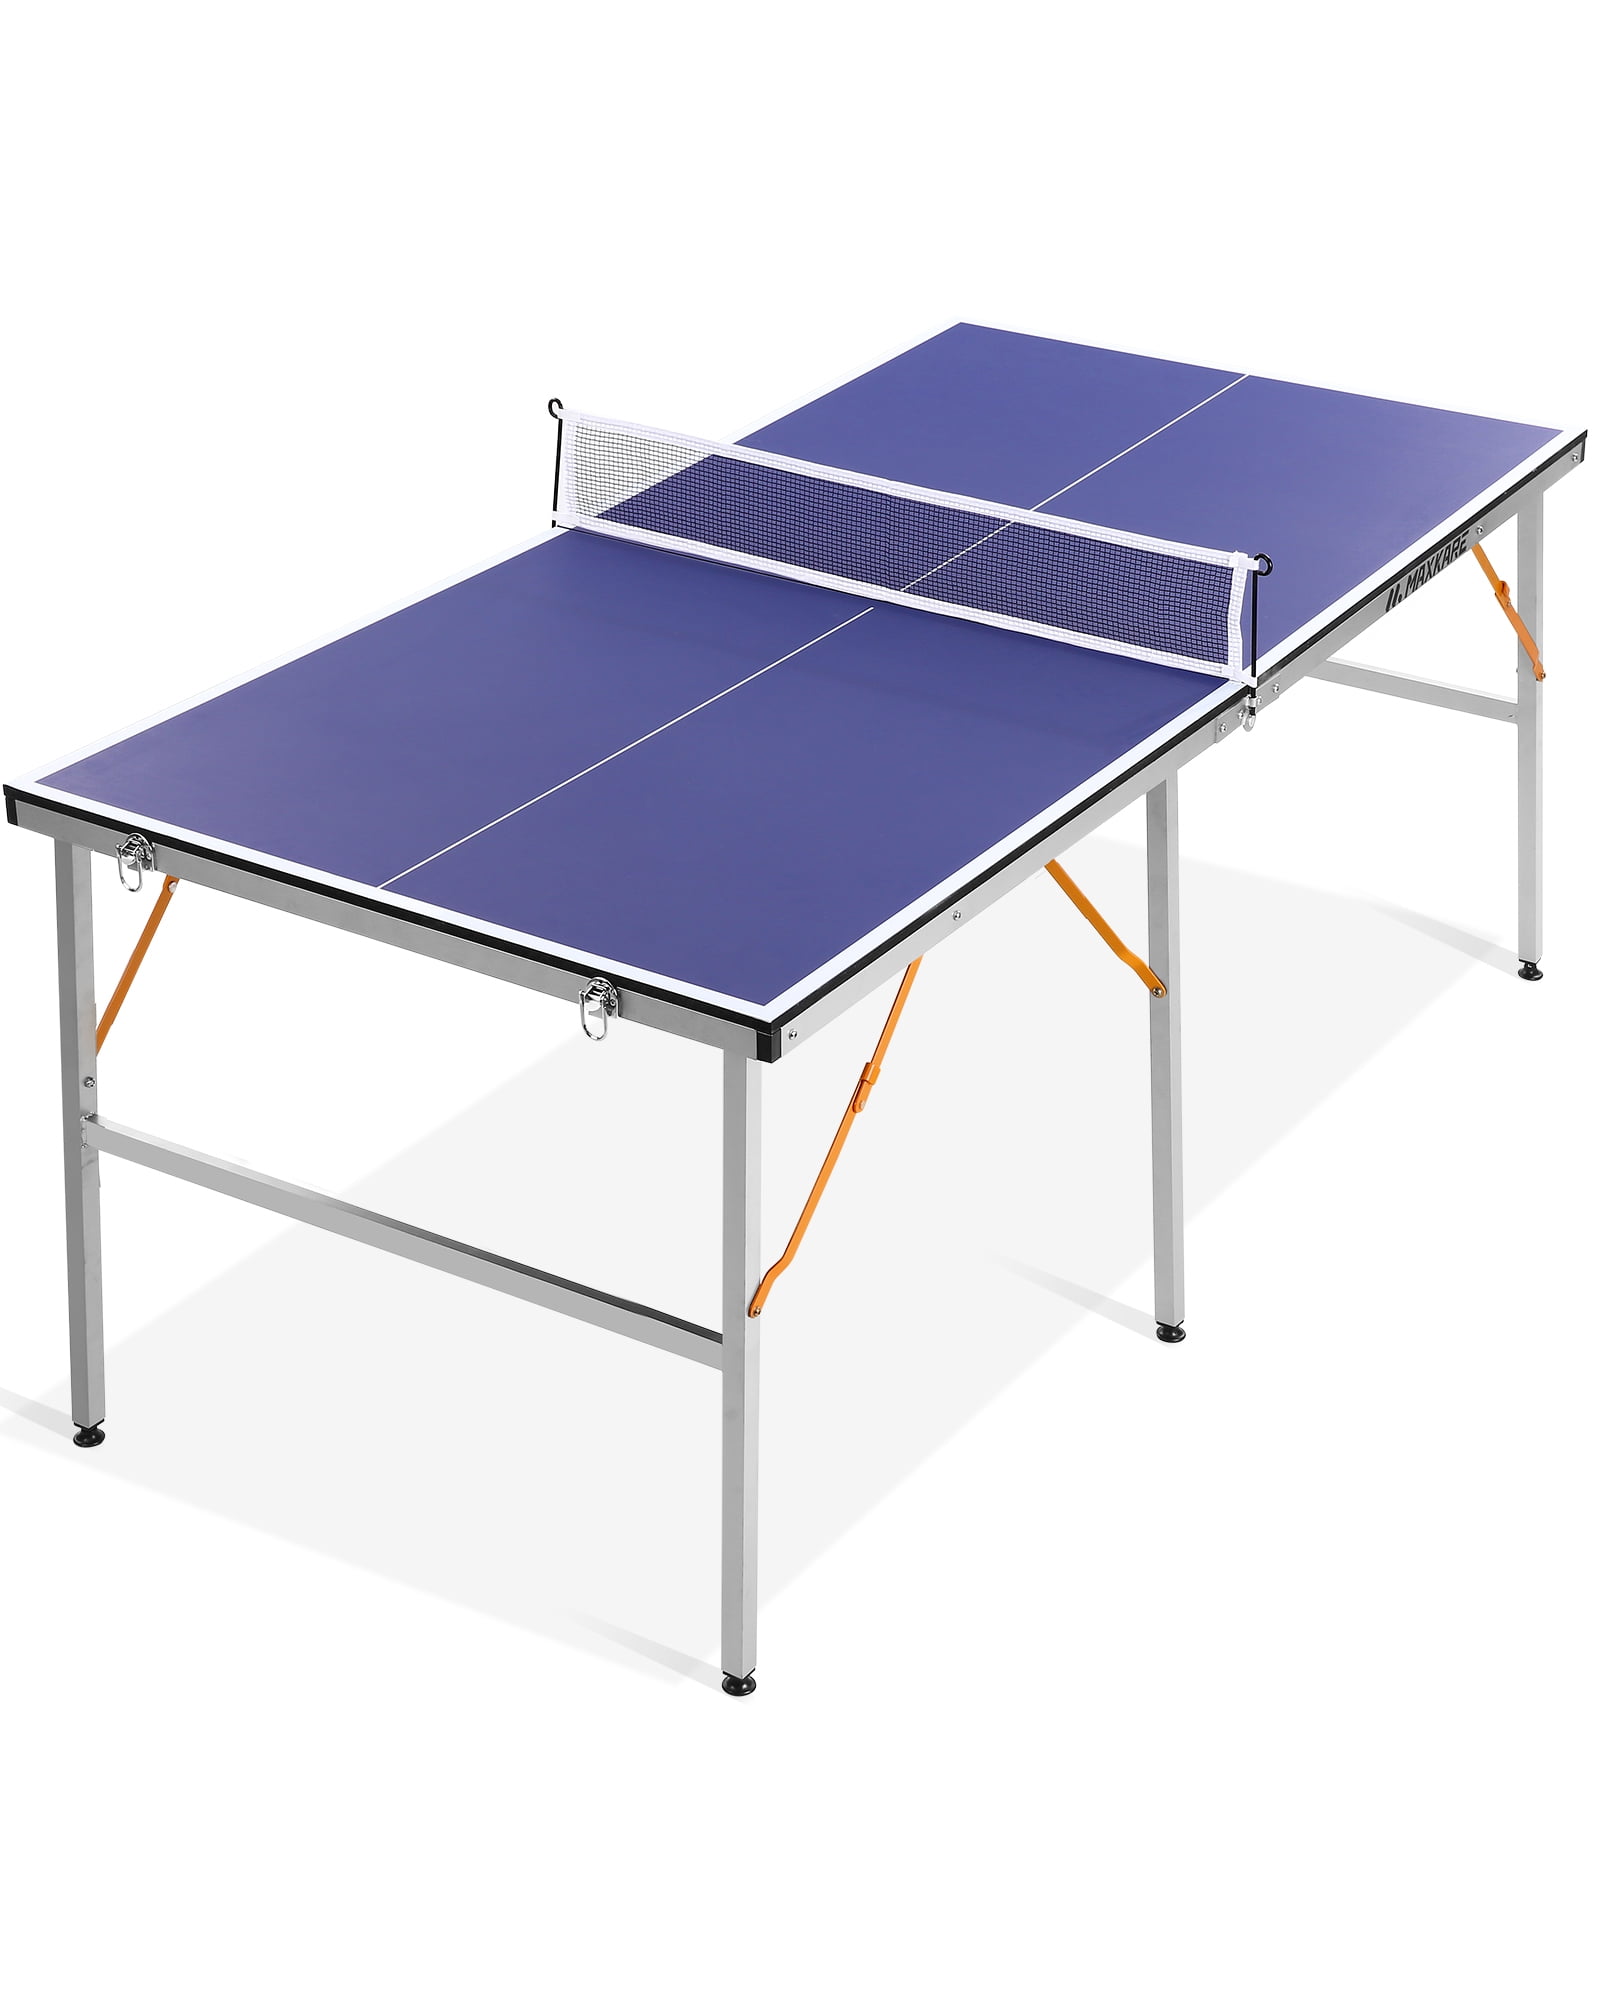 Lion 3 Star Table Tennis Training Ball Ping Pong Tournament Match Balls Pack 12 